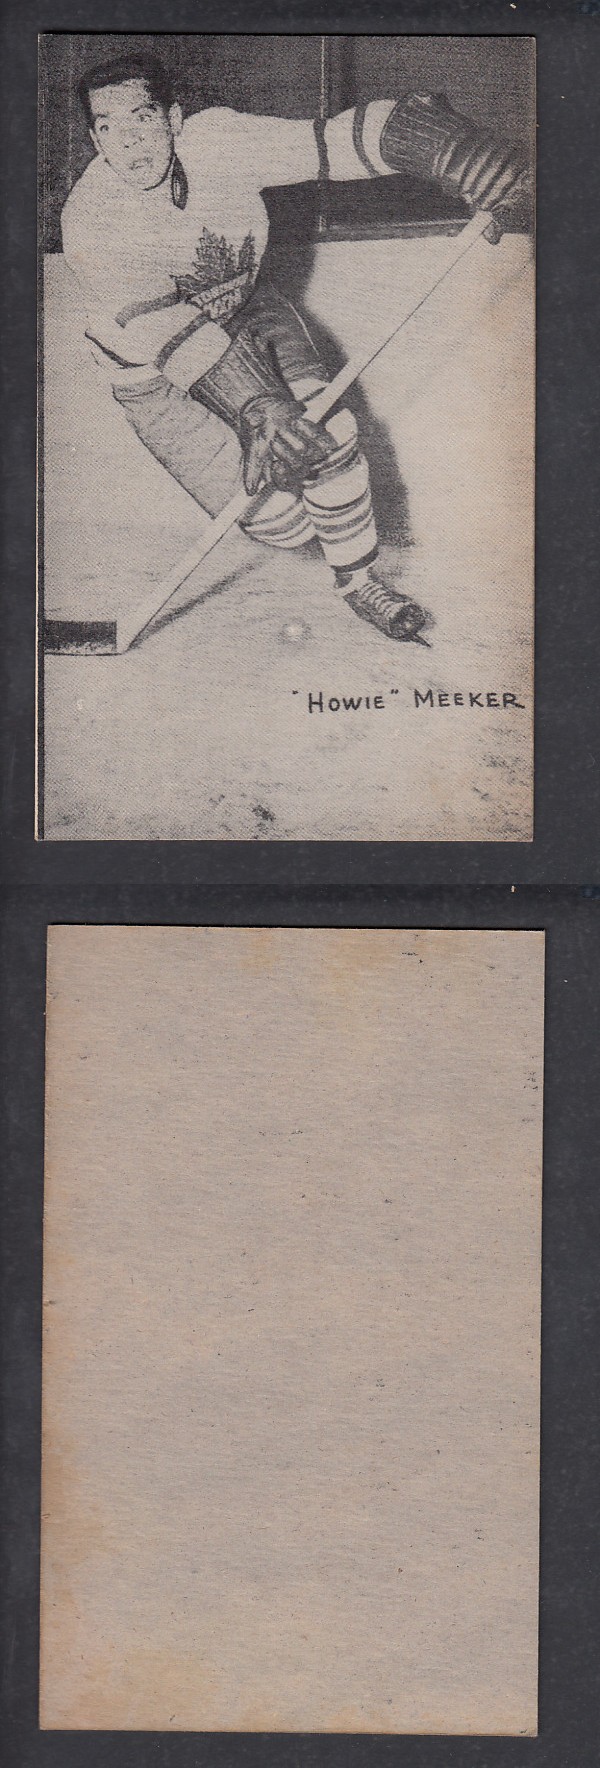 1948-52 EXHIBITS HOCKEY CARD H. MEEKER photo